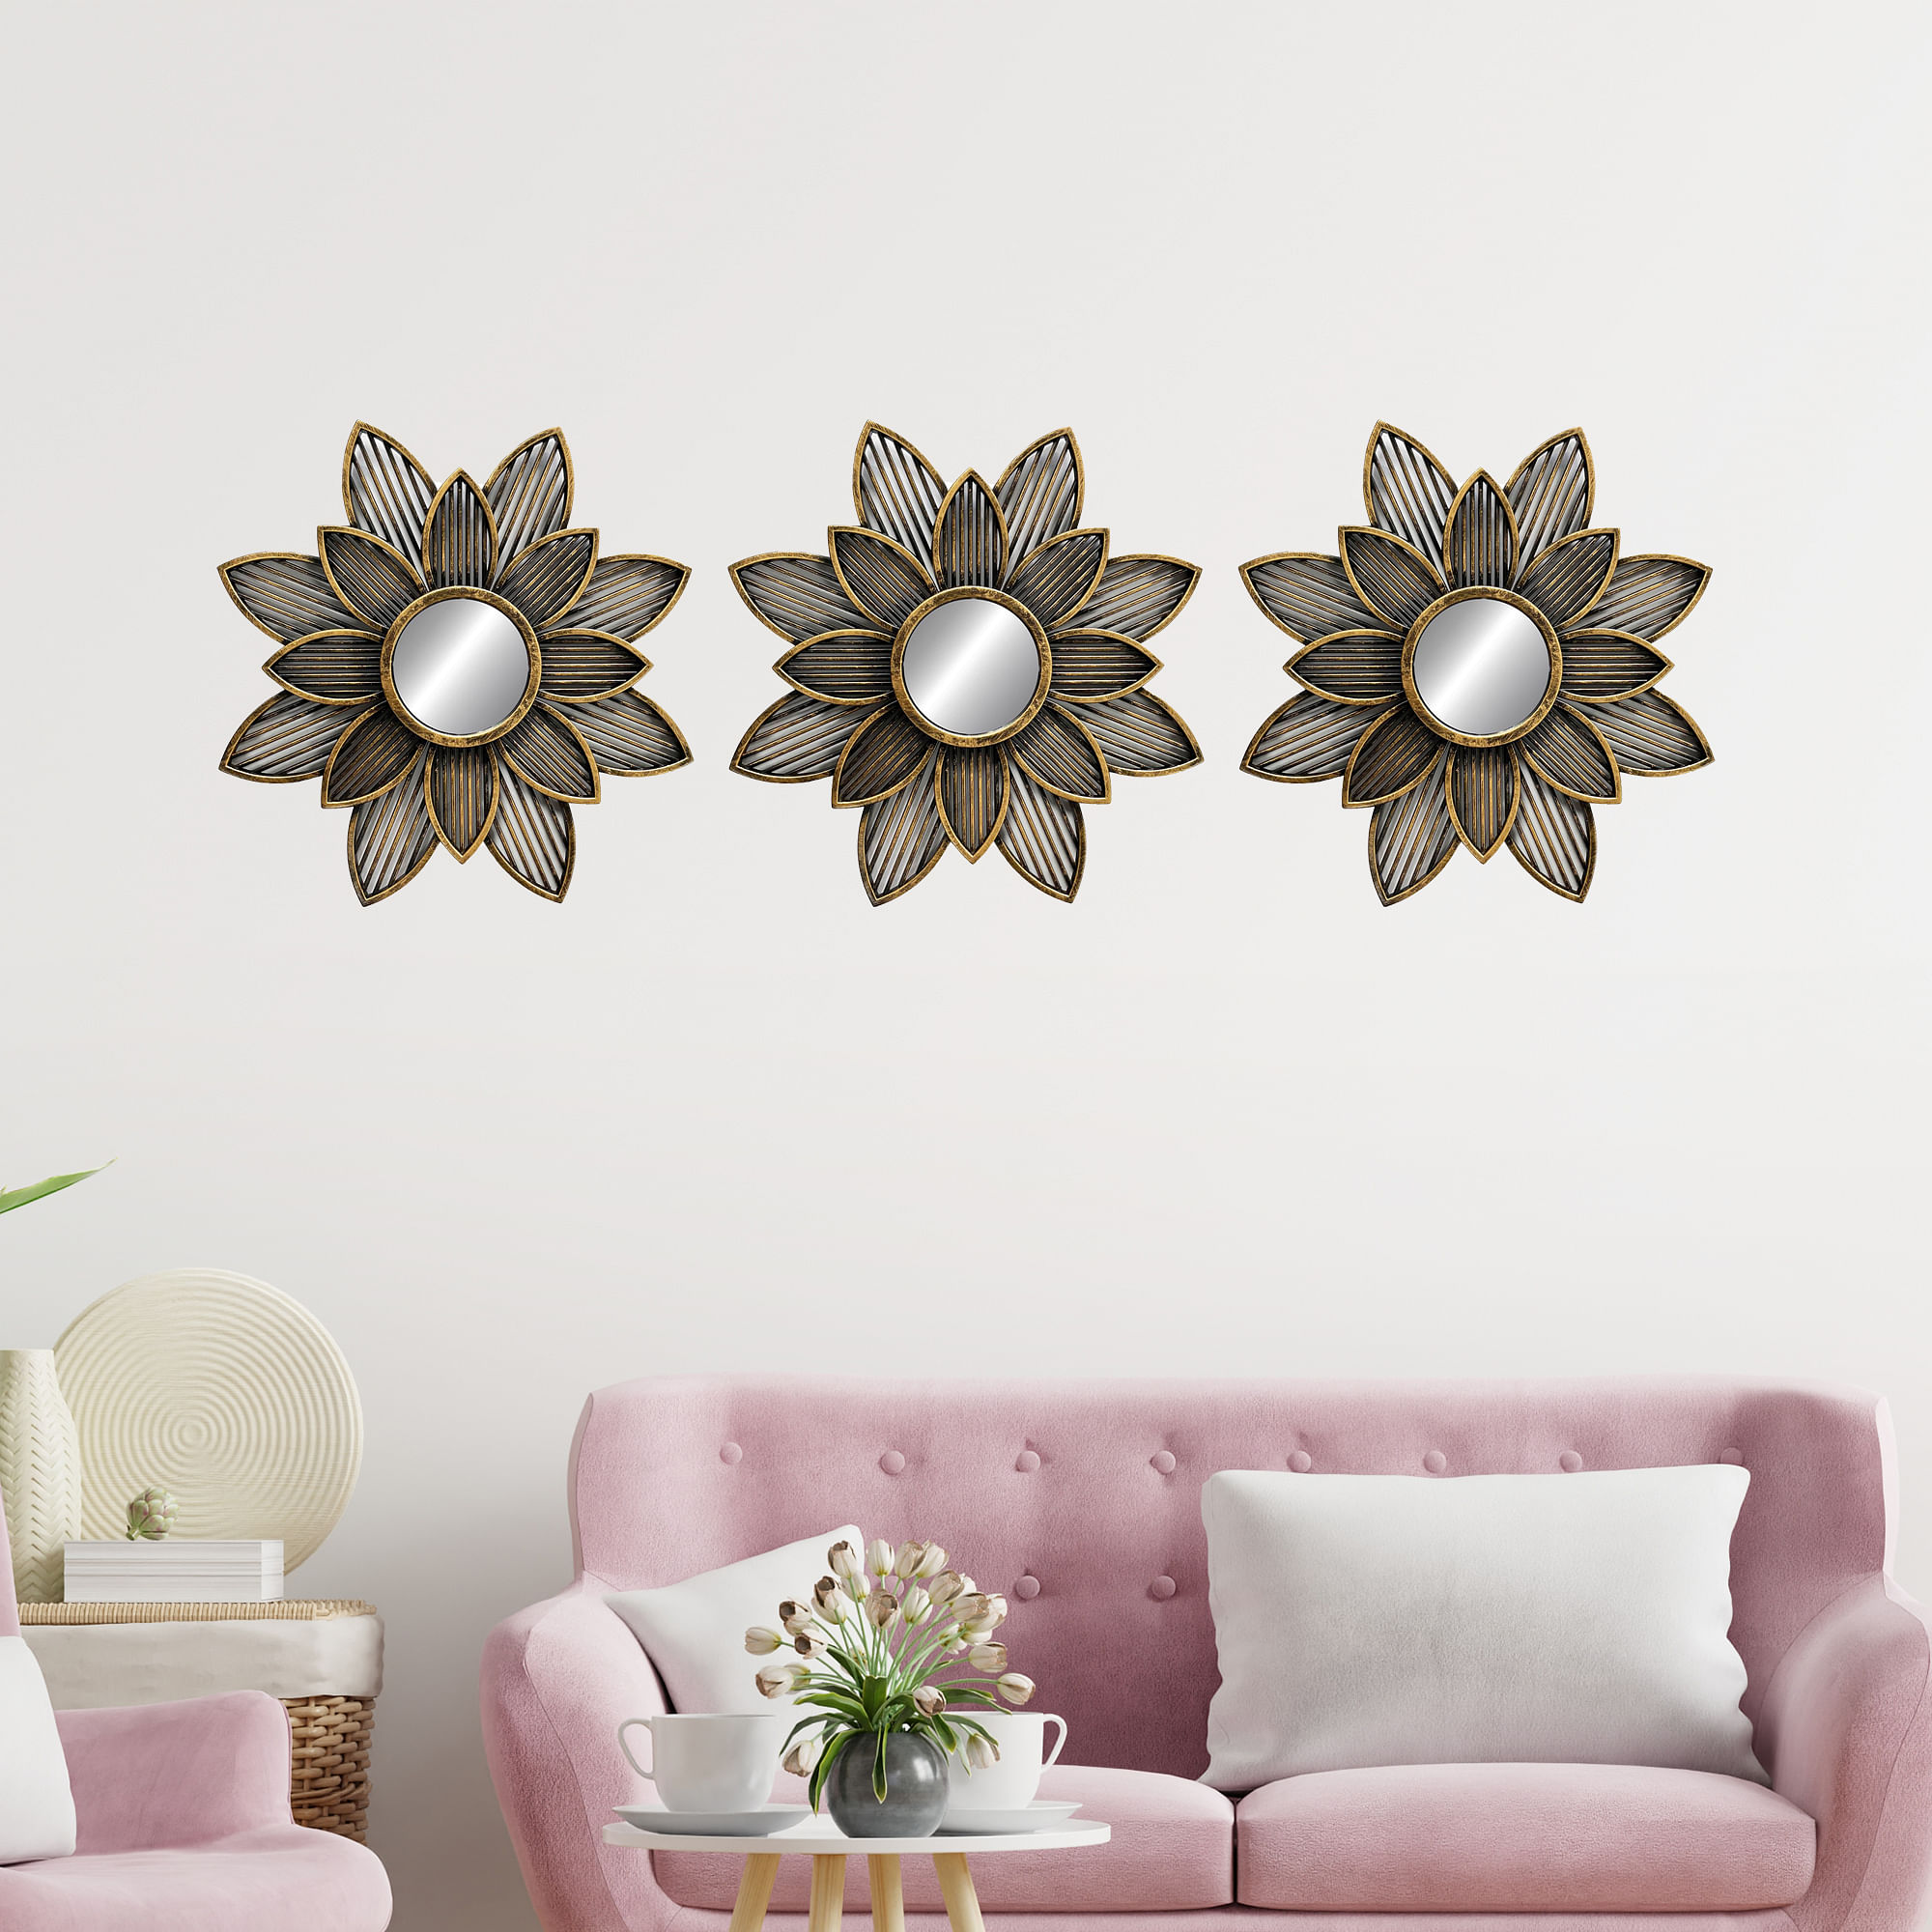 Mirage  Floral Decorative Mirrors, Set of 3pc Dia 25cm in Gold Colour